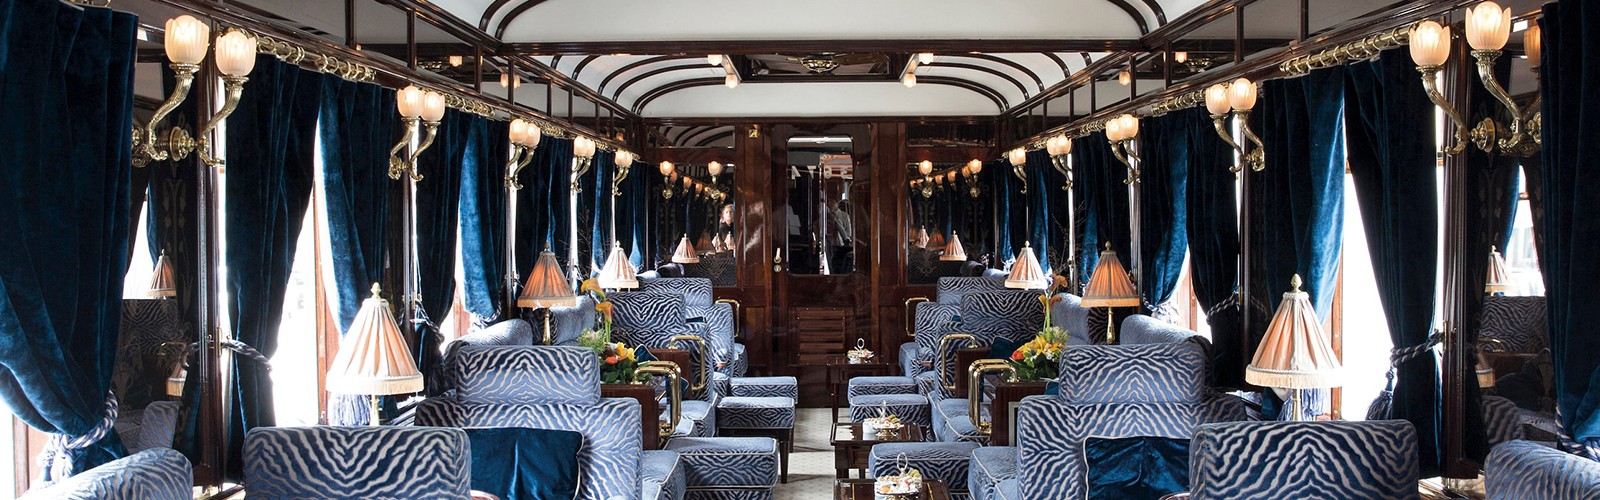 The Best Orient Express Journeys in Europe